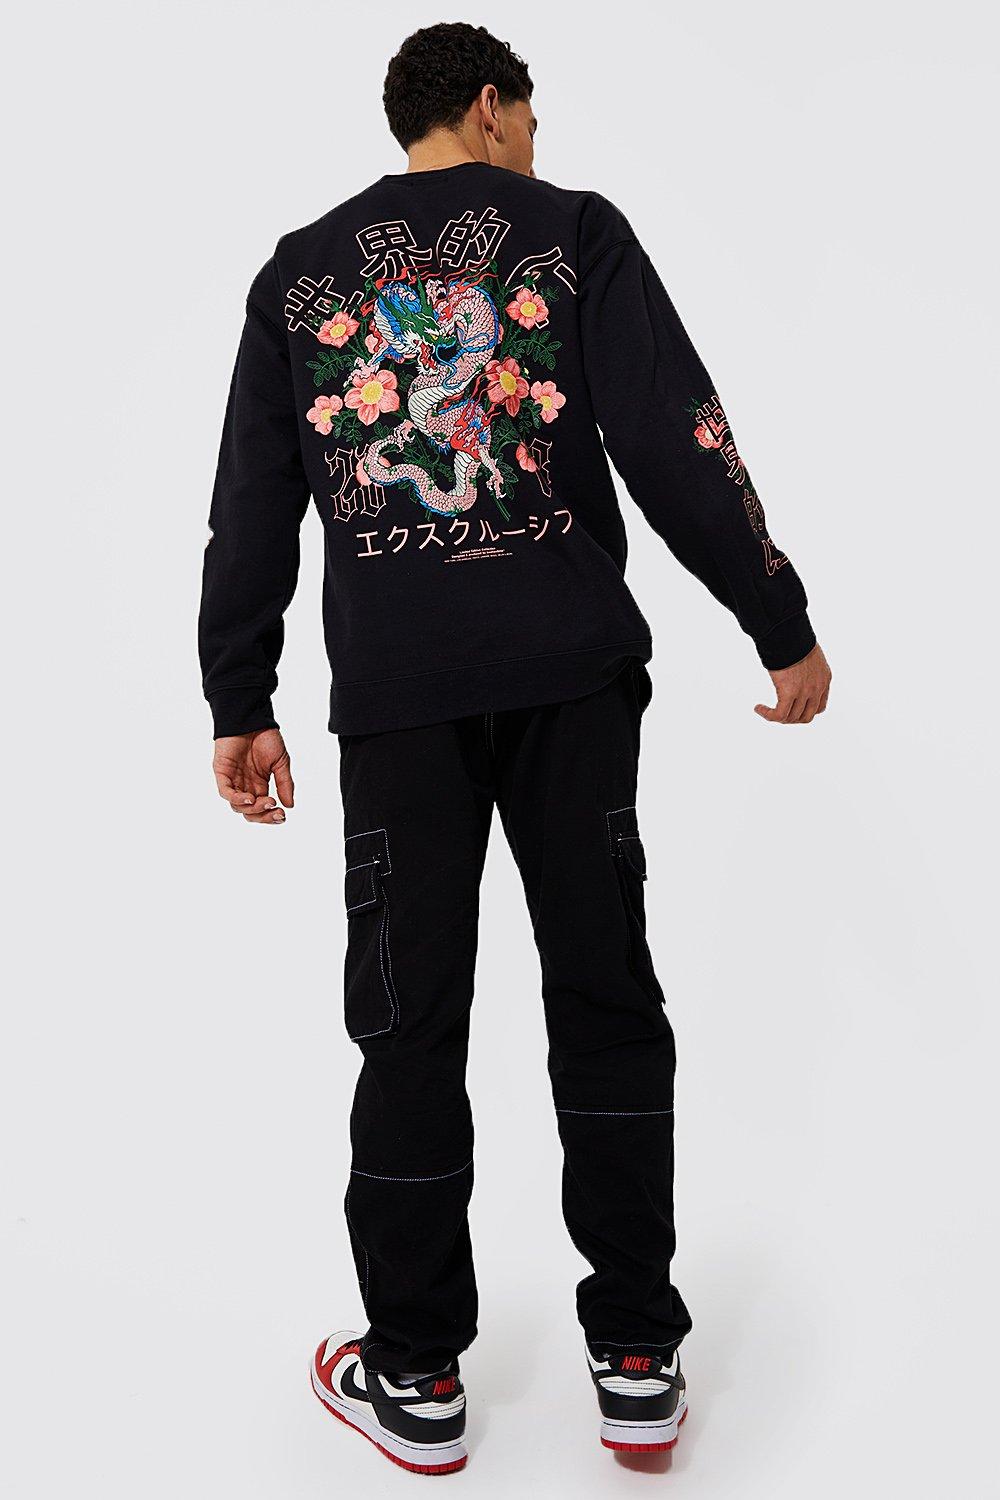 WDIRARA Men's Floral Graphic Print Hoodie Sweatshirt